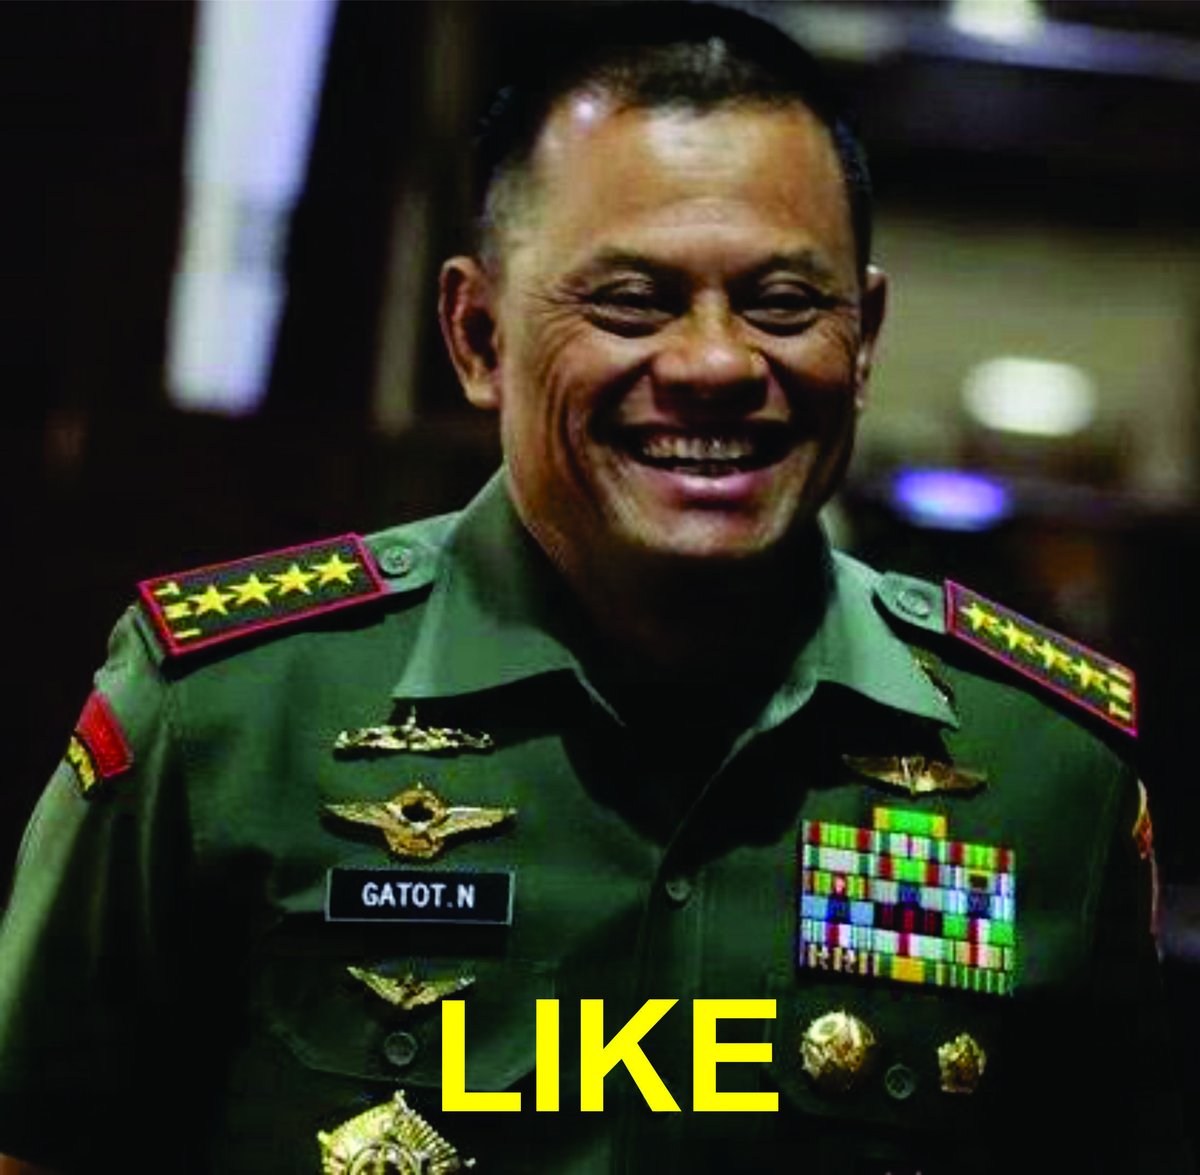 Diantara dua mantan Panglima TNI siapa yg layak mendampingi Ganjar Pranowo di Pilpres 2024 - Jenderal (Purn) Andika Perkasa (RT) - Jenderal (Purn) Gatot Nurmantyo (Like)